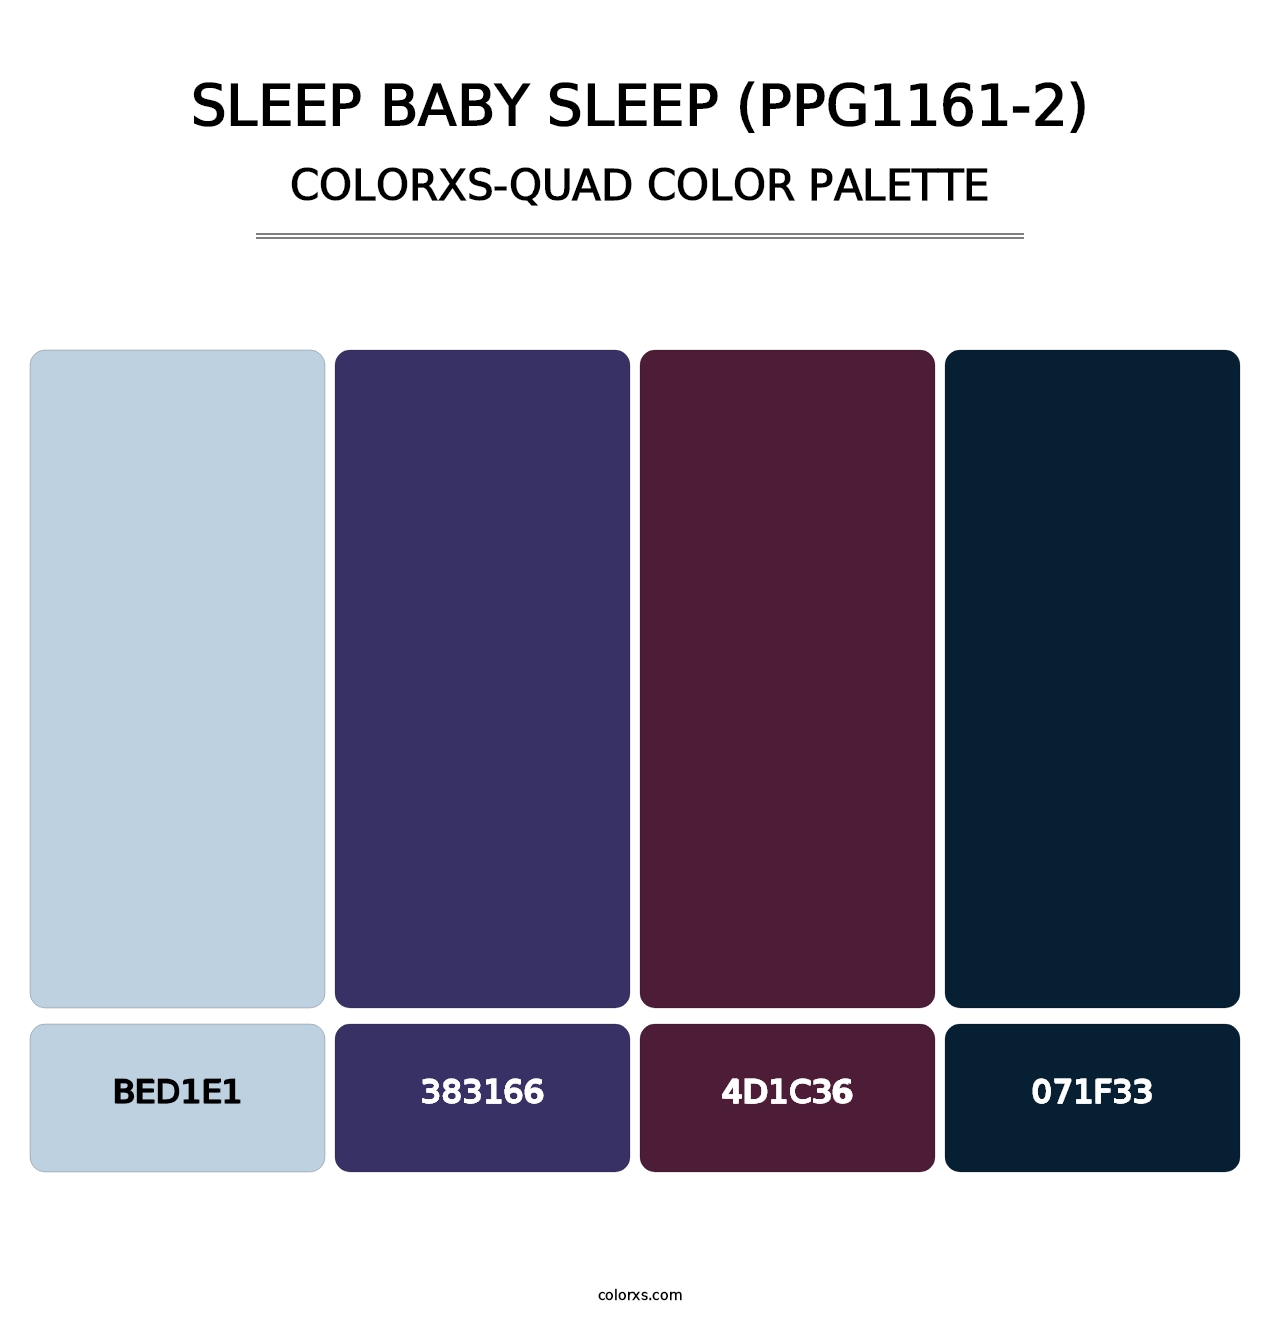 Sleep Baby Sleep (PPG1161-2) - Colorxs Quad Palette